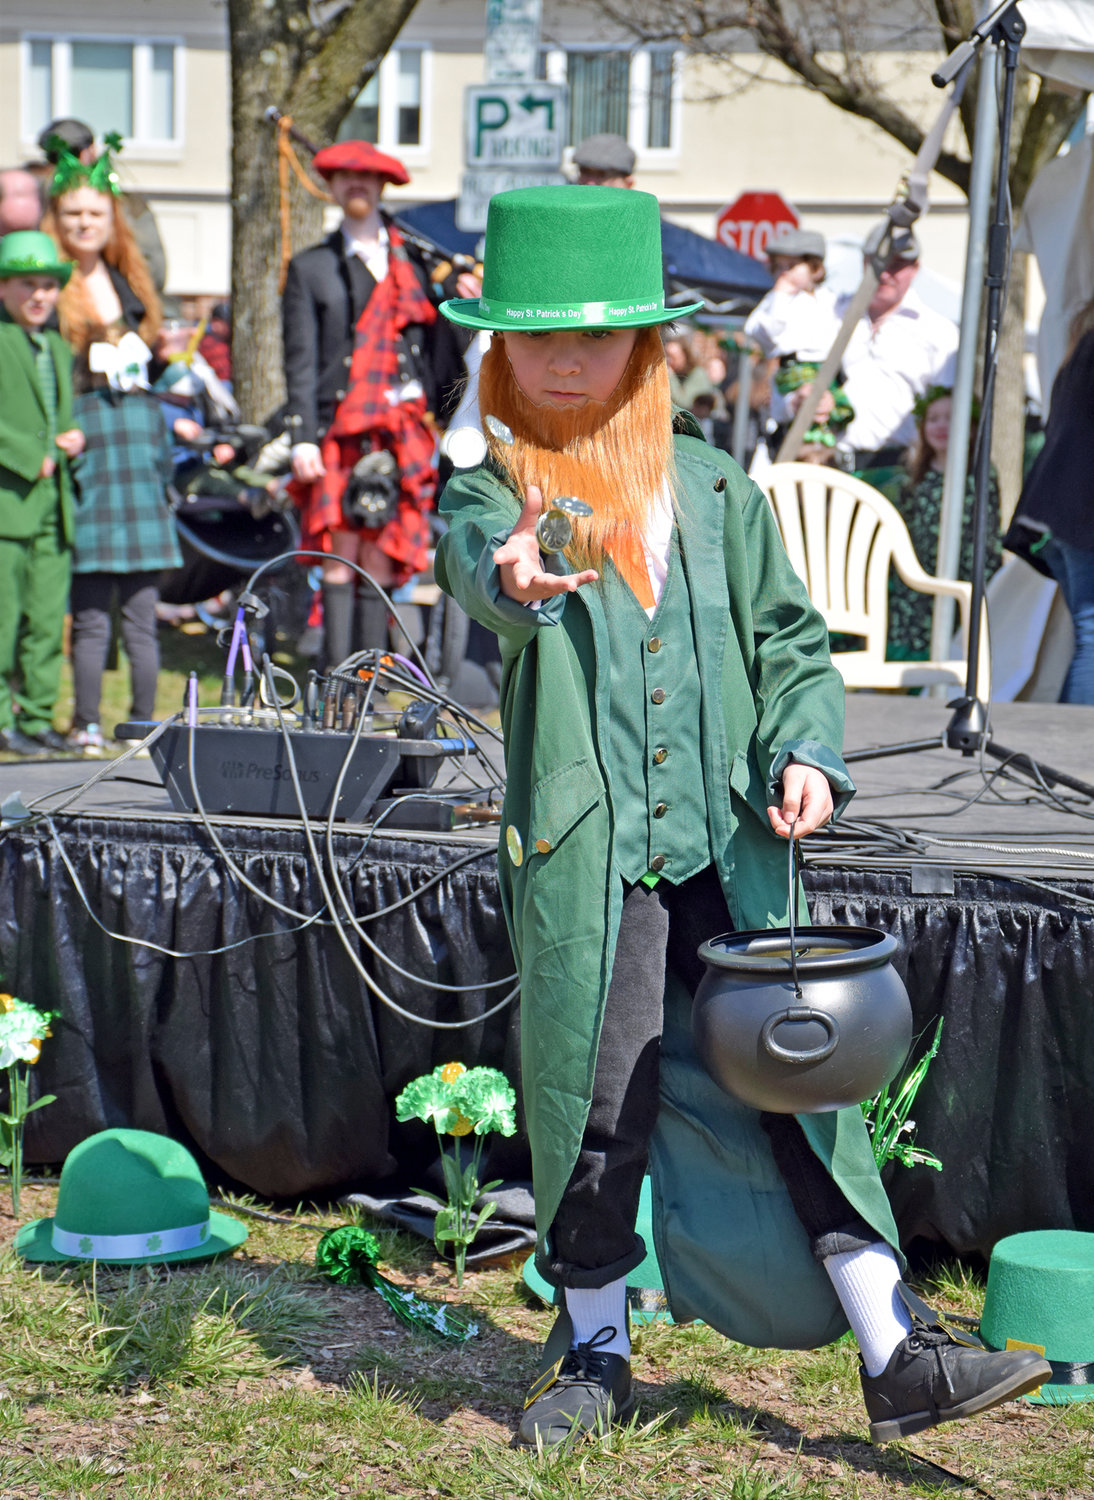 Dyson Adams, winner of the Kids Celtic Costume Contest.